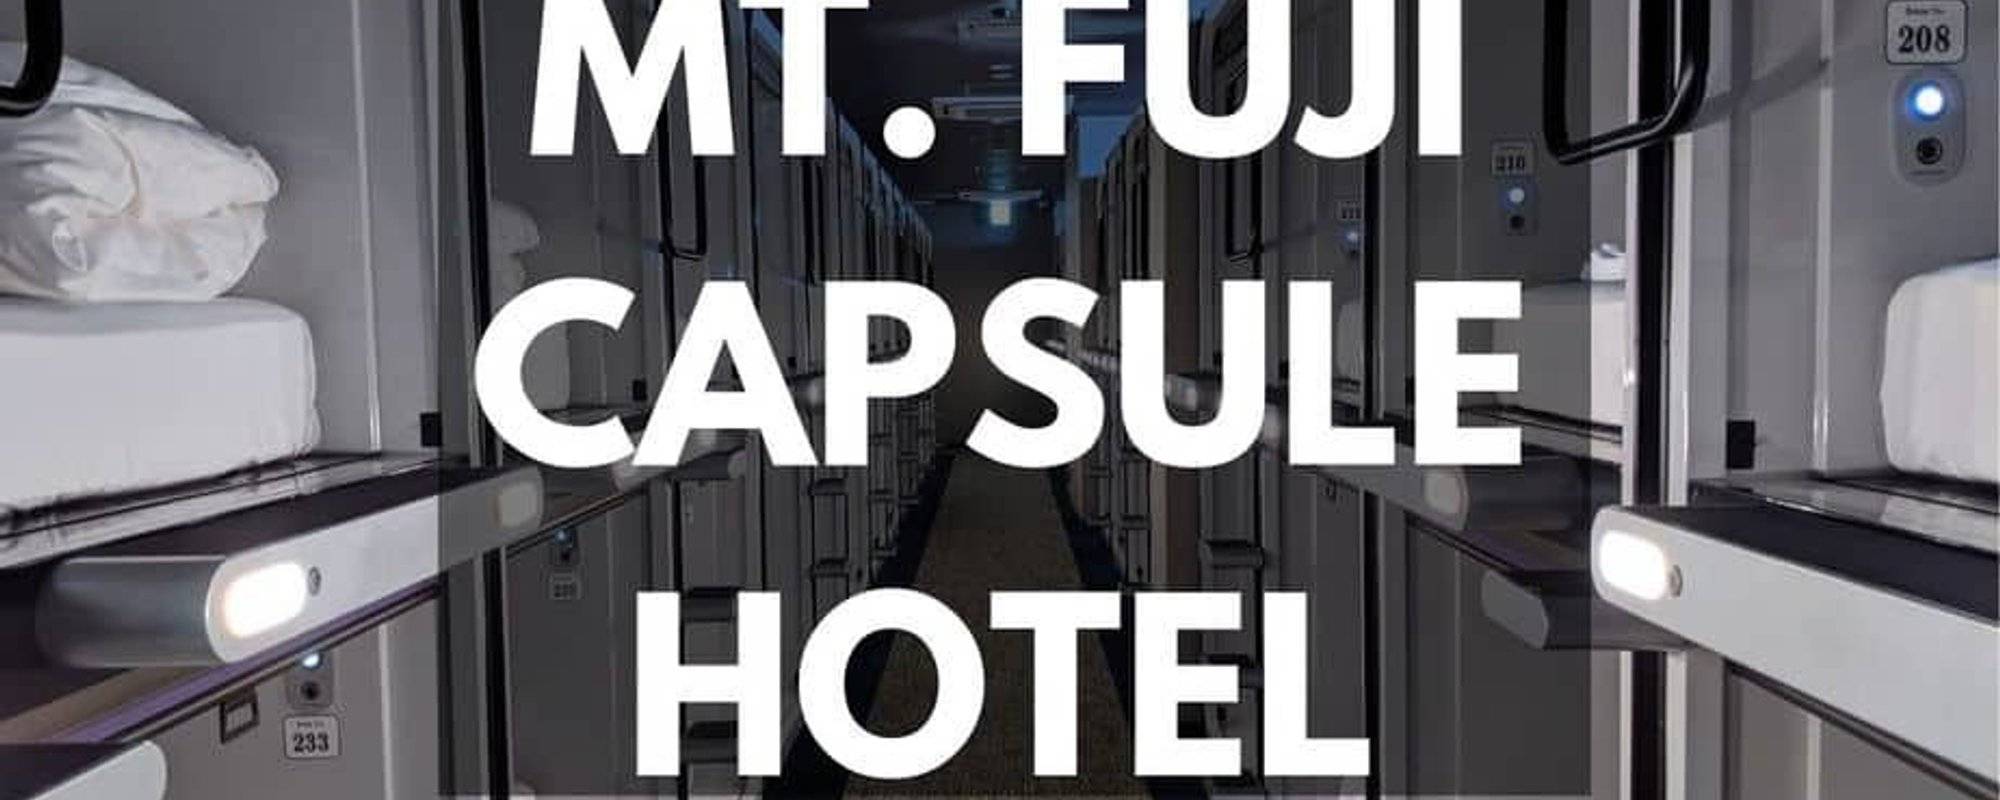 Mt. Fuji Capsule Hotel: Cabin & Lounge Highland Station Inn